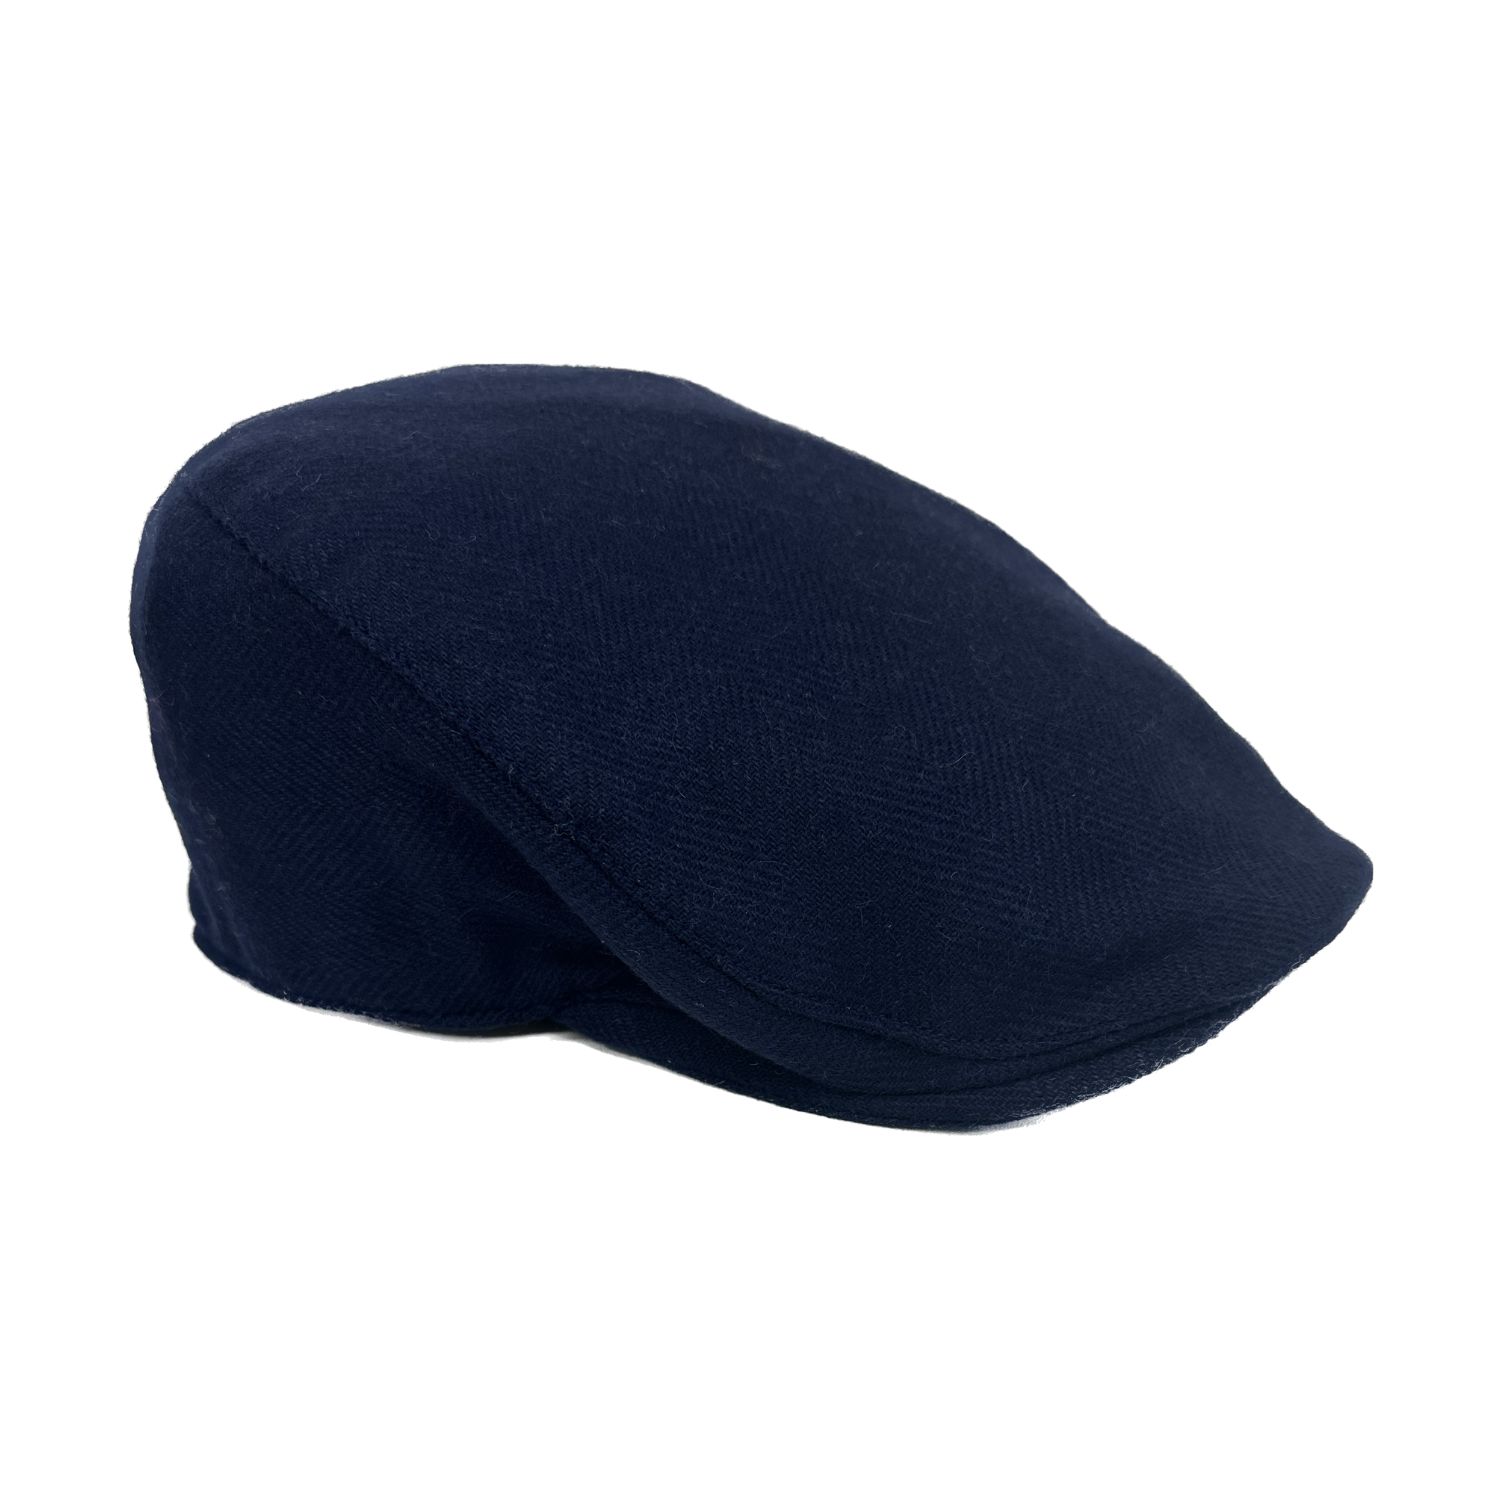 Navy Cashmere Flat Cap